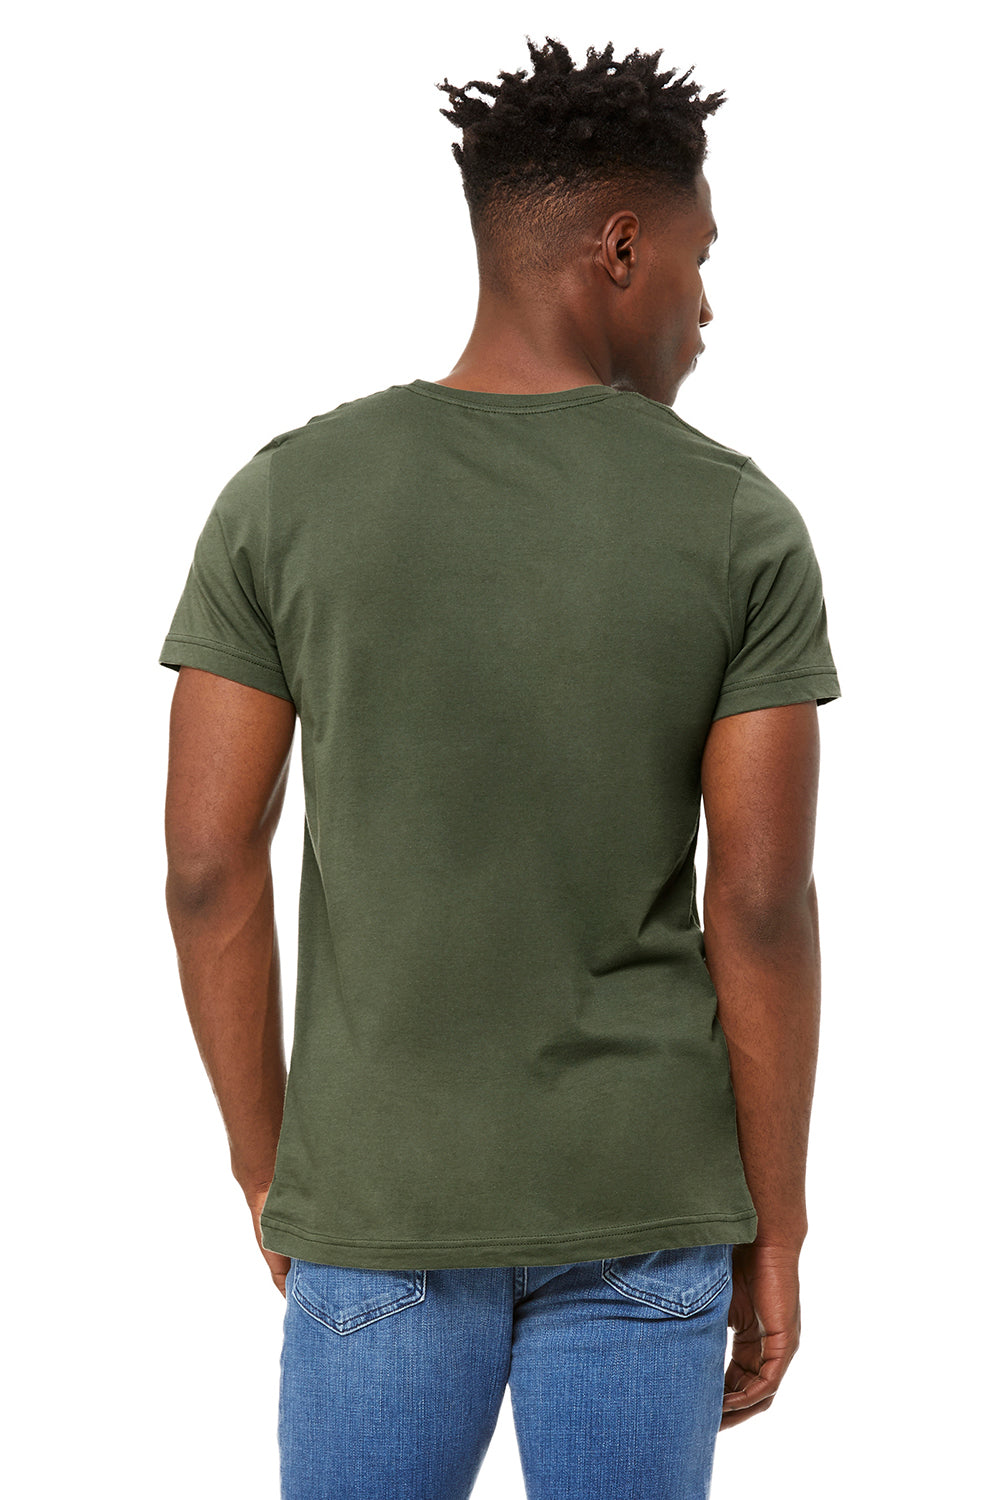 Bella + Canvas 3001U/3001USA Mens USA Made Jersey Short Sleeve Crewneck T-Shirt Military Green Model Back